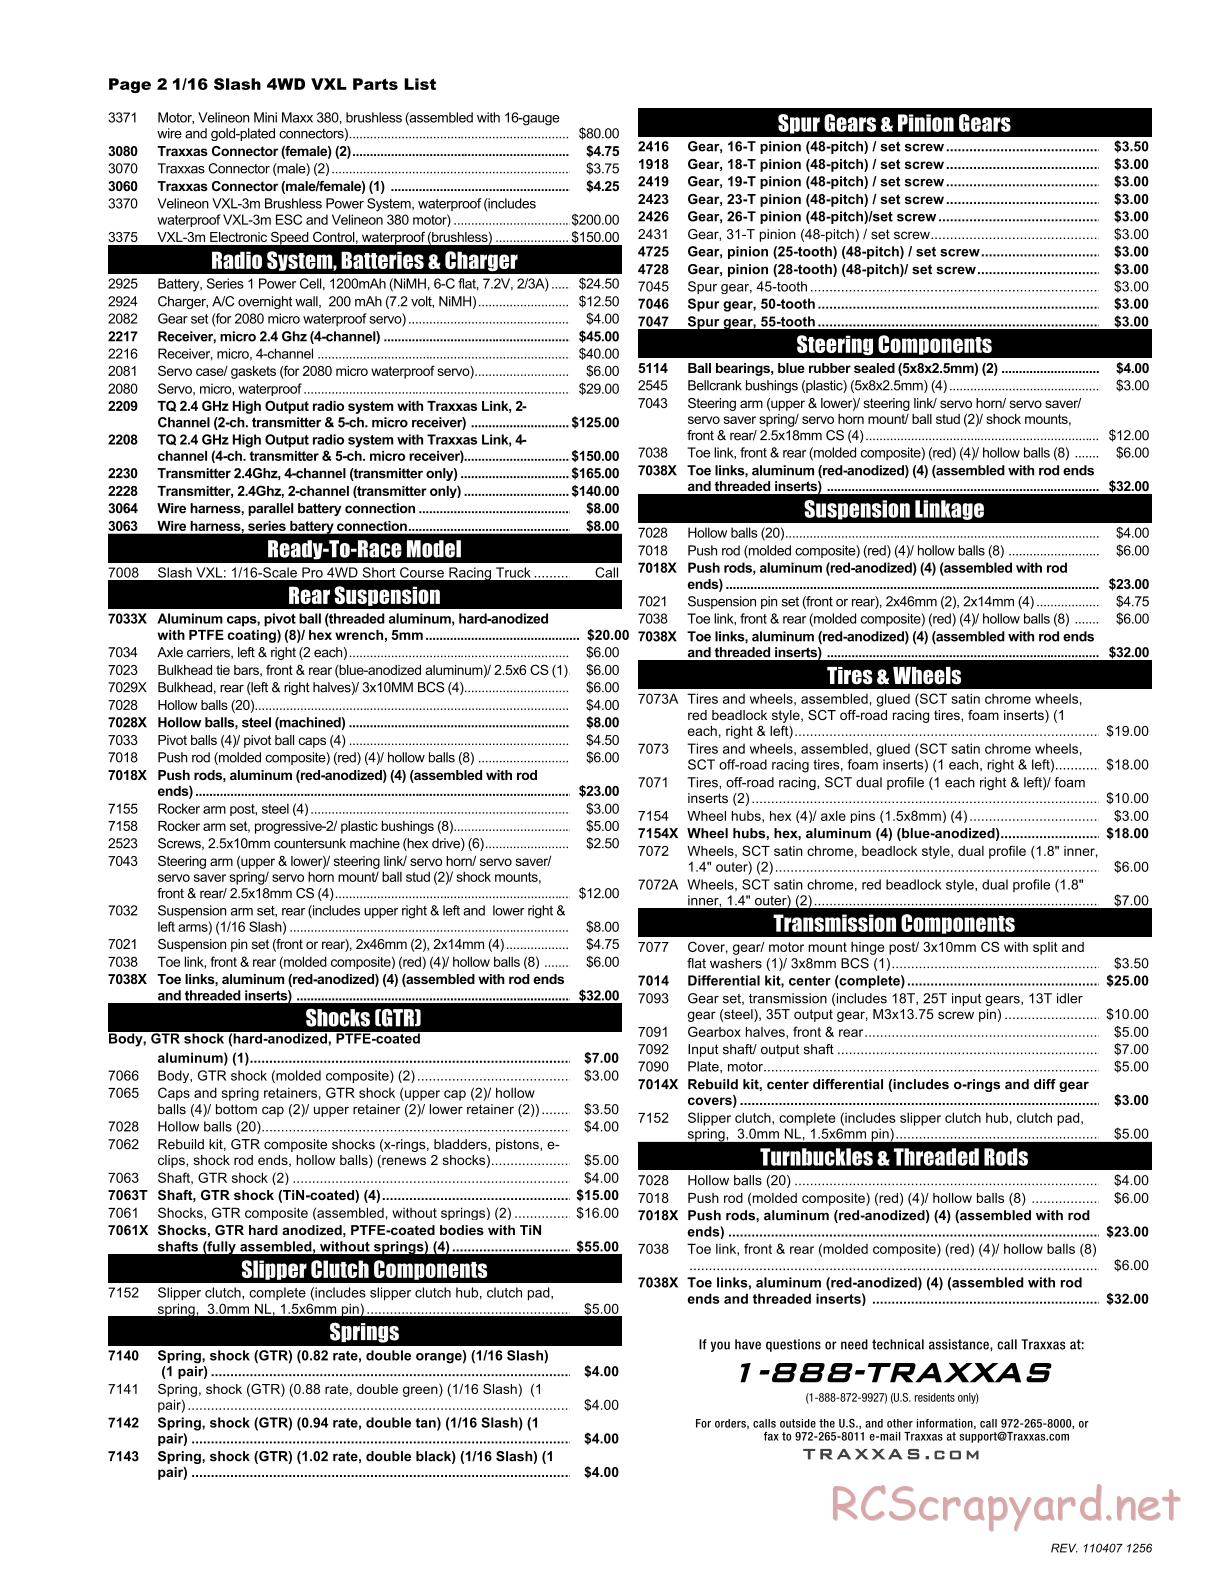 Traxxas - 1/16 Slash VXL 4WD (2009) - Parts List - Page 2